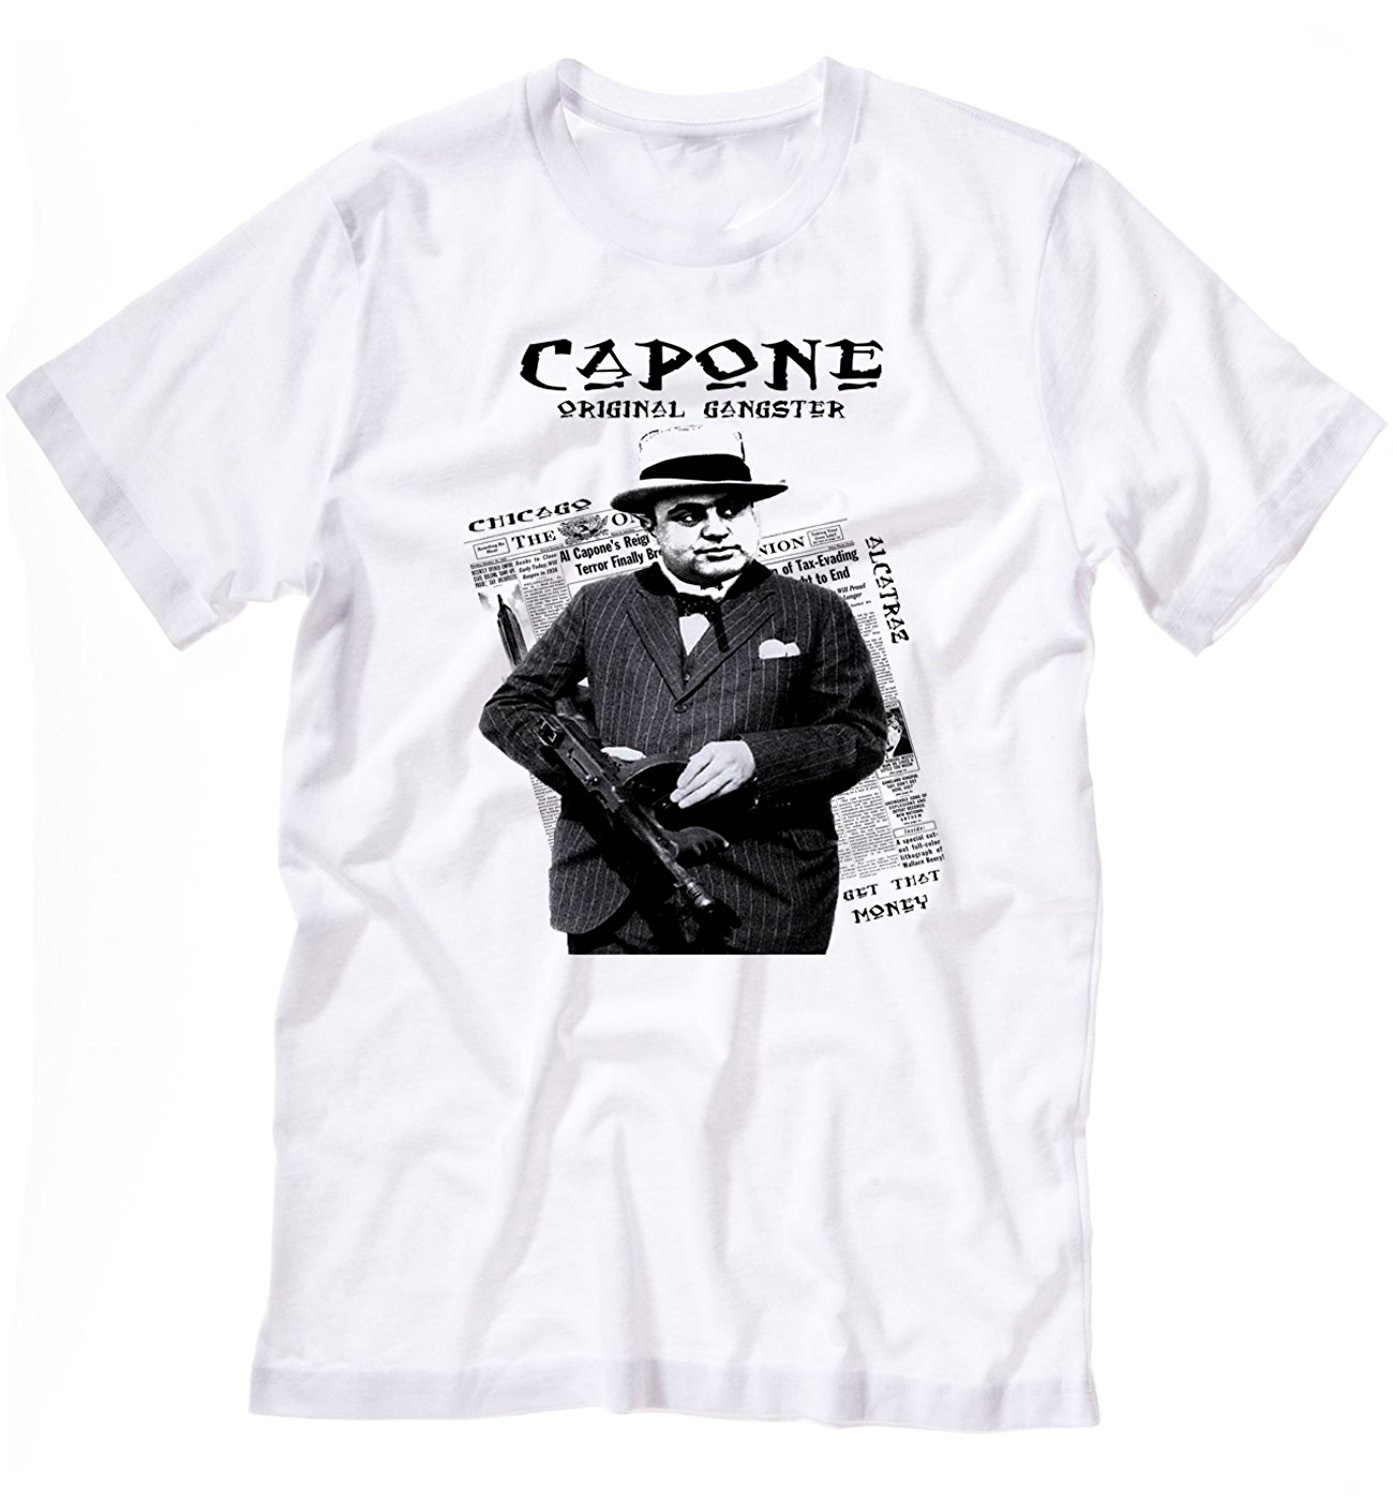 al capone tee shirts - www.optuseducation.com.